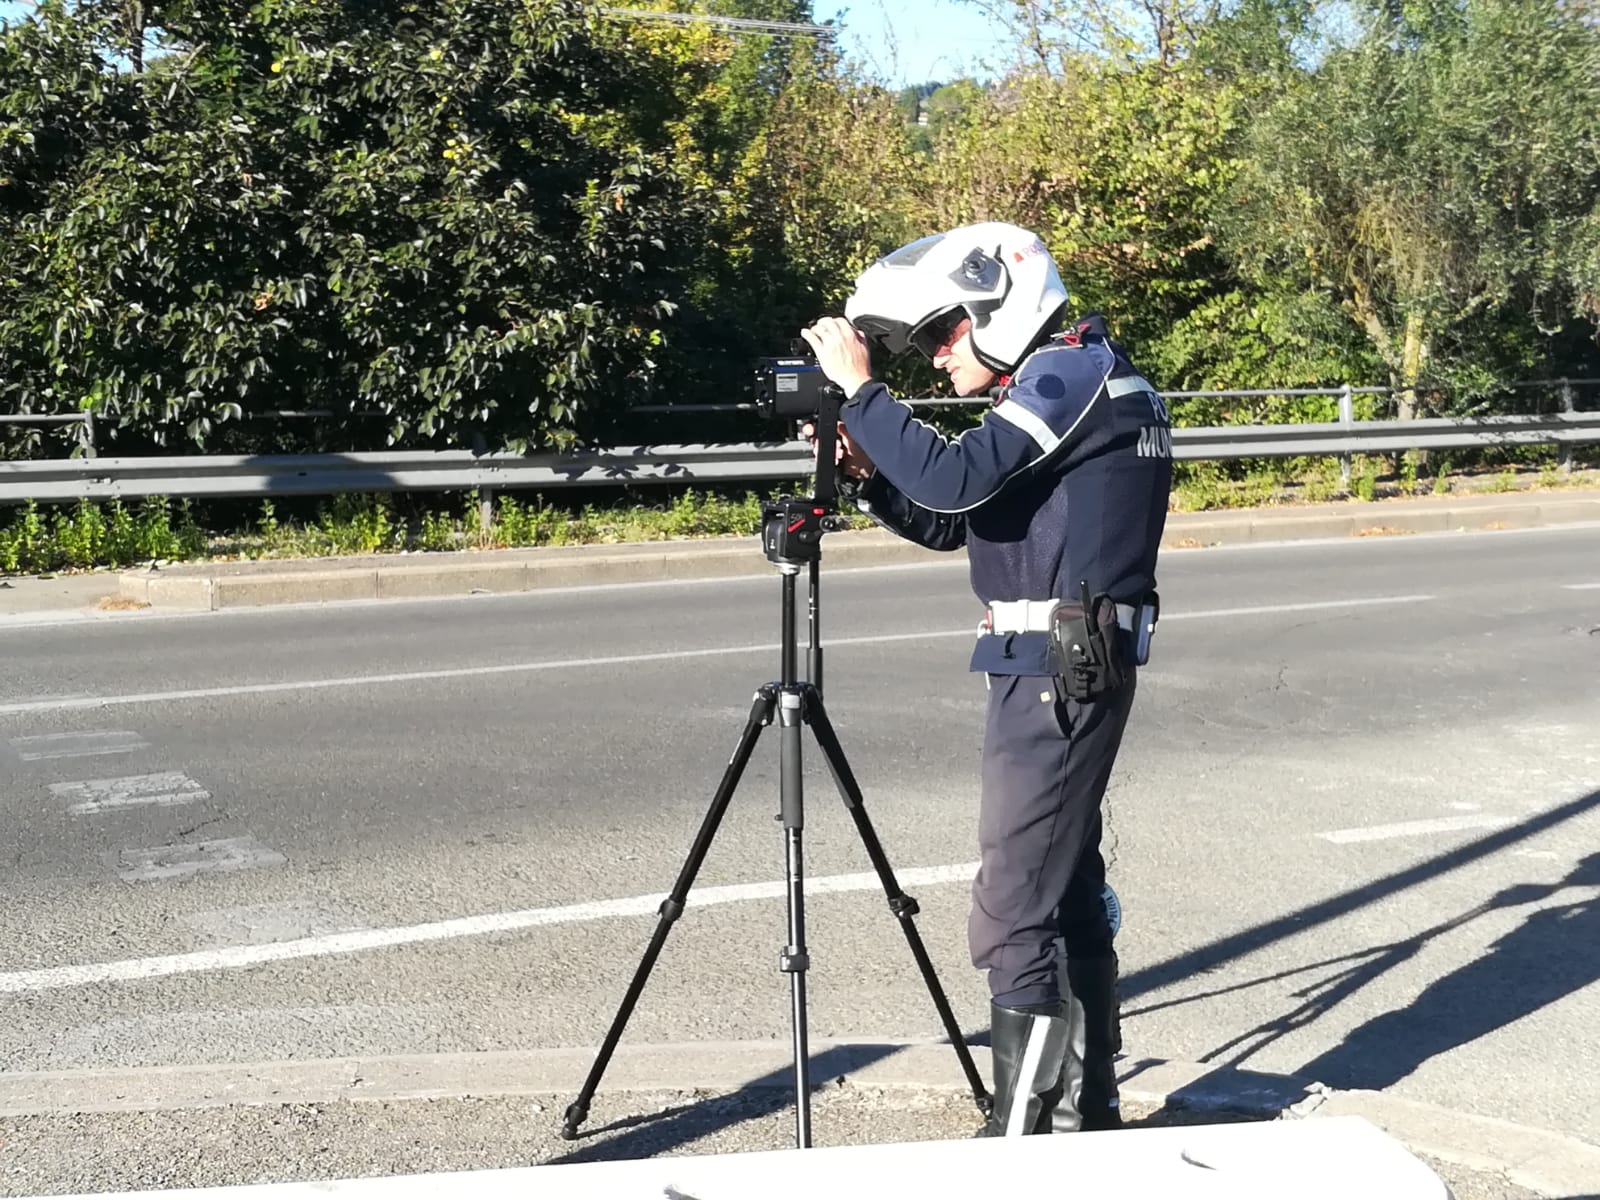 Sicurezza stradale, Polizia Municipale di Firenze in azione col teleaser